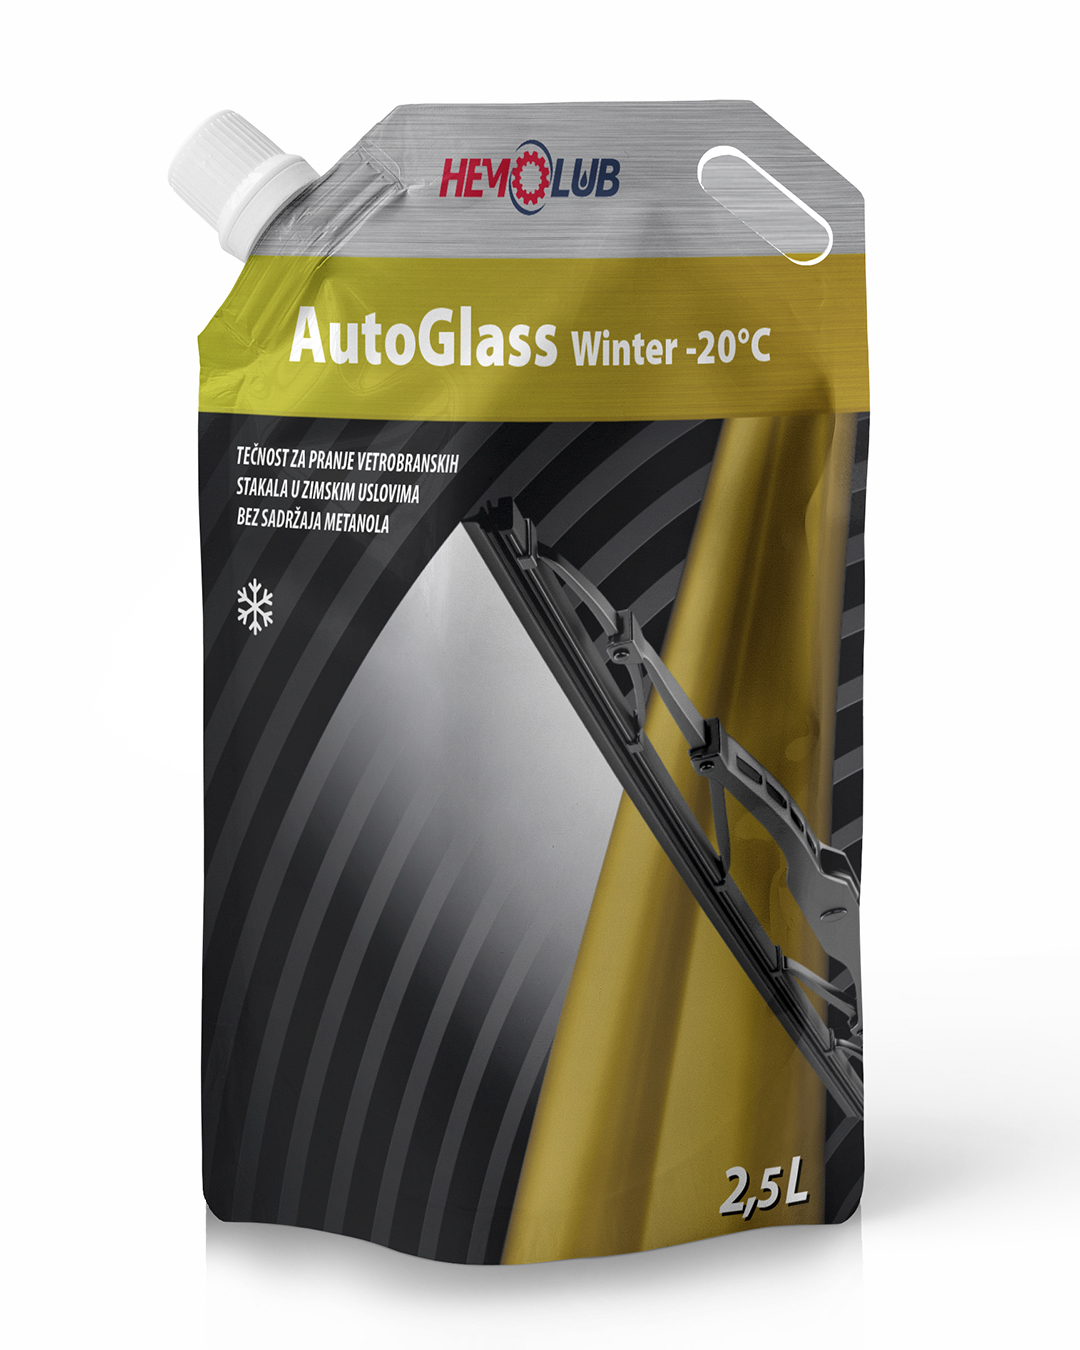 HEMOLUB AUTO GLASS Winter -20ºC